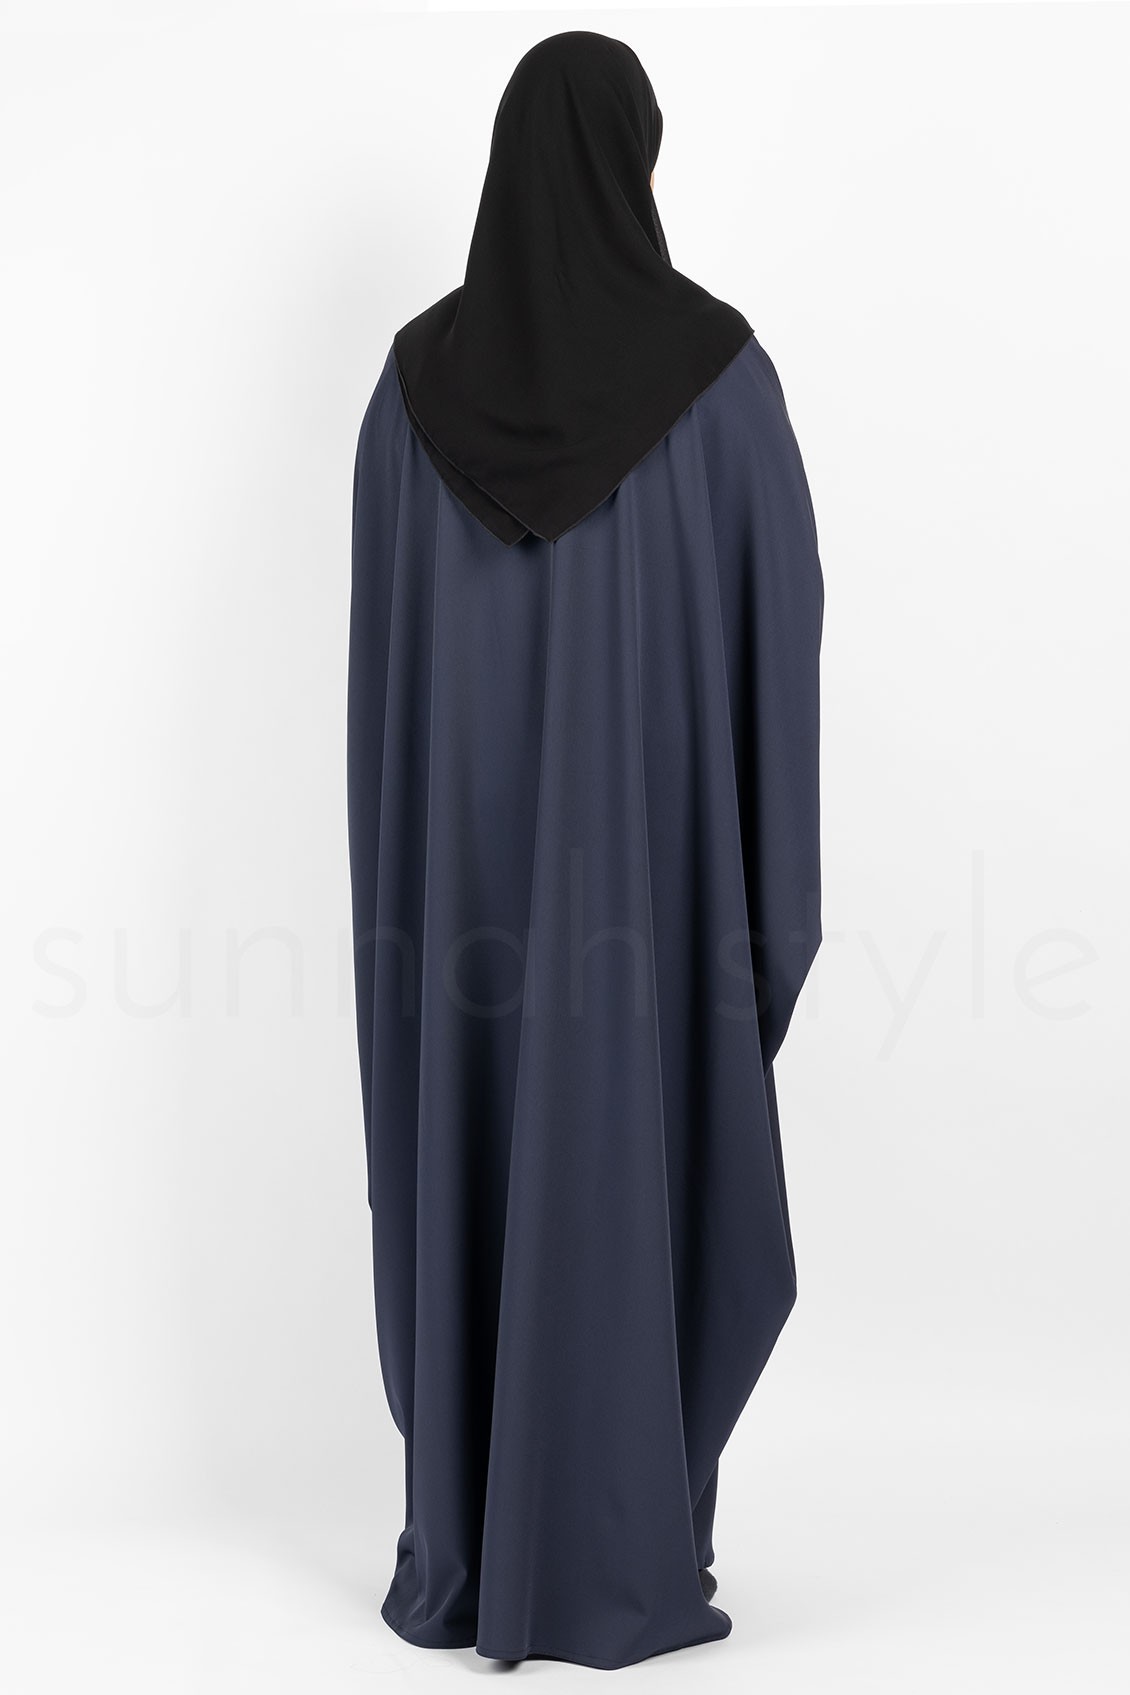 Sunnah Style Essentials Square Hijab Standard Black